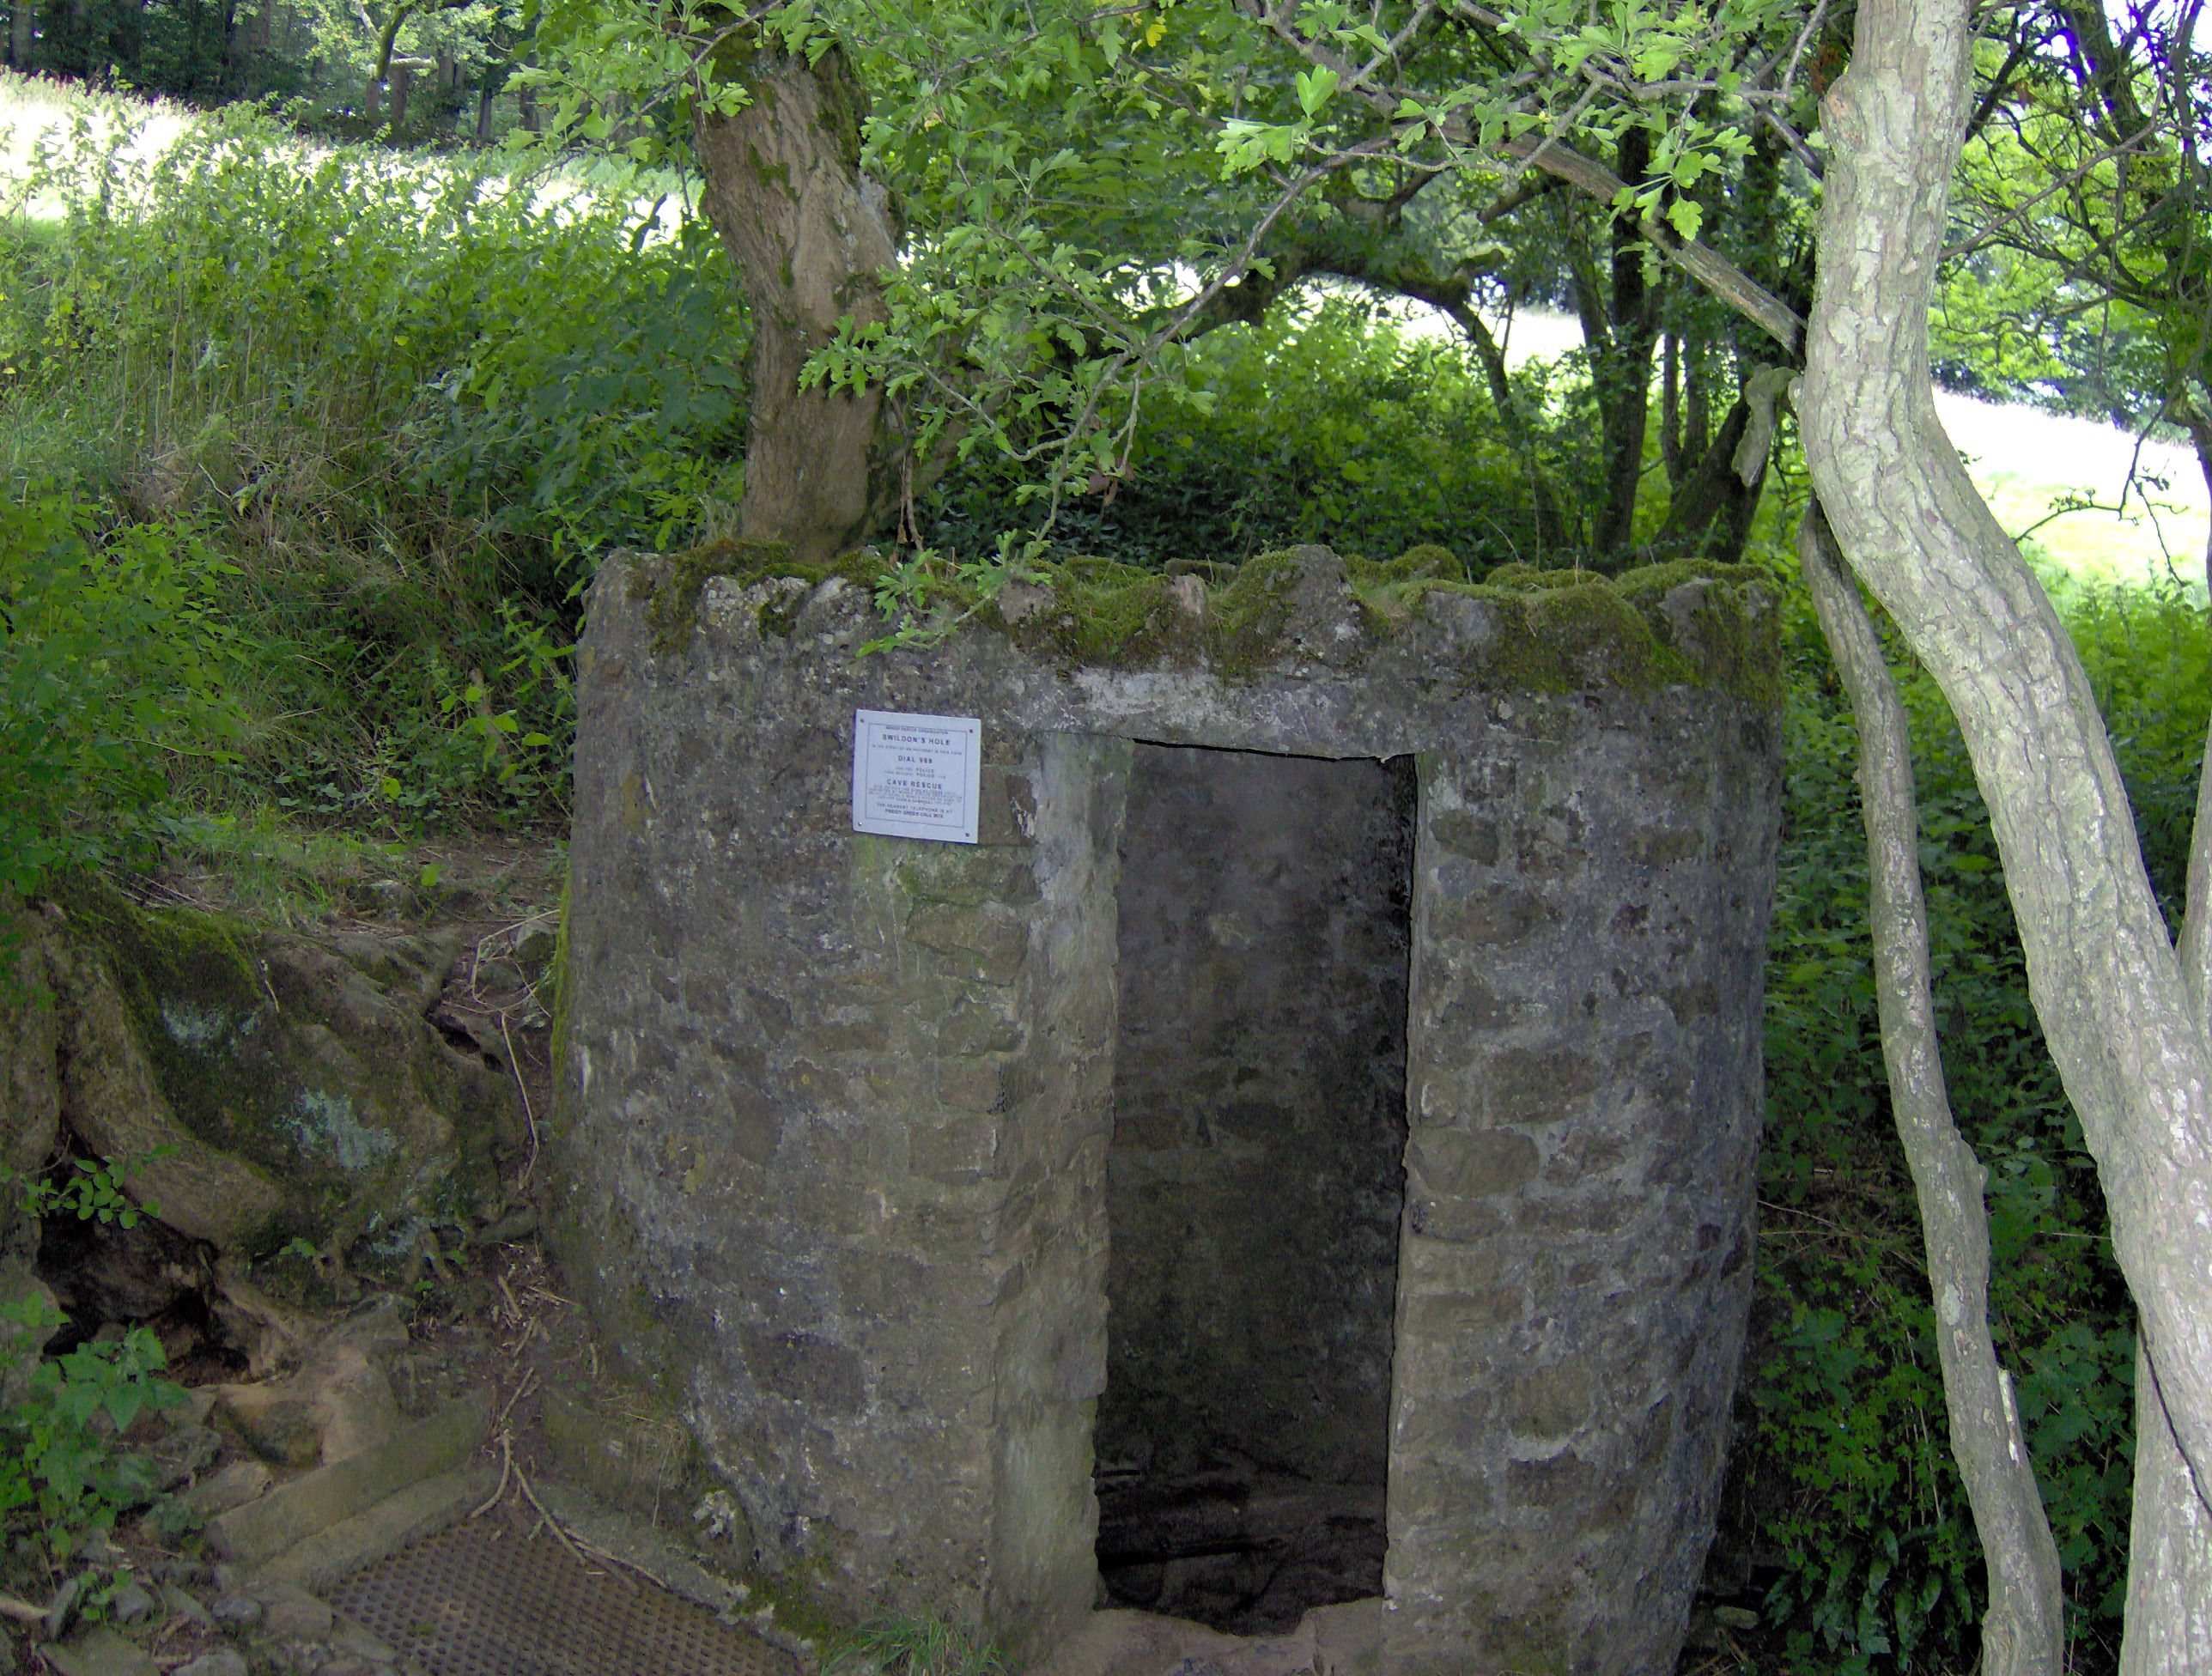 Swildon's Hole